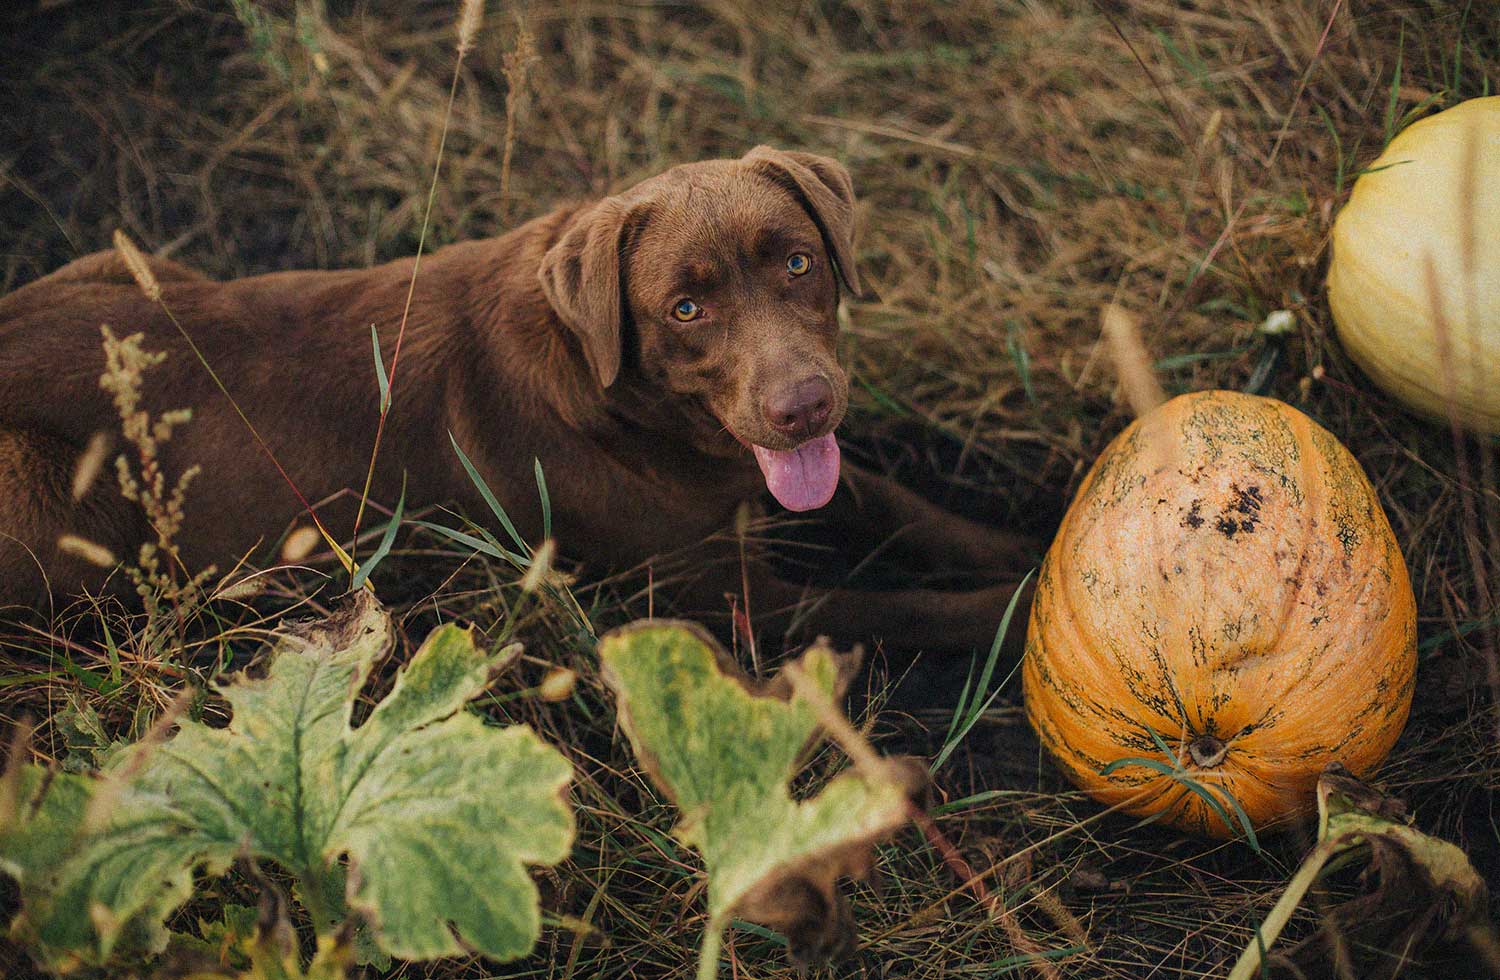 Dog laying down next to a pumpkin